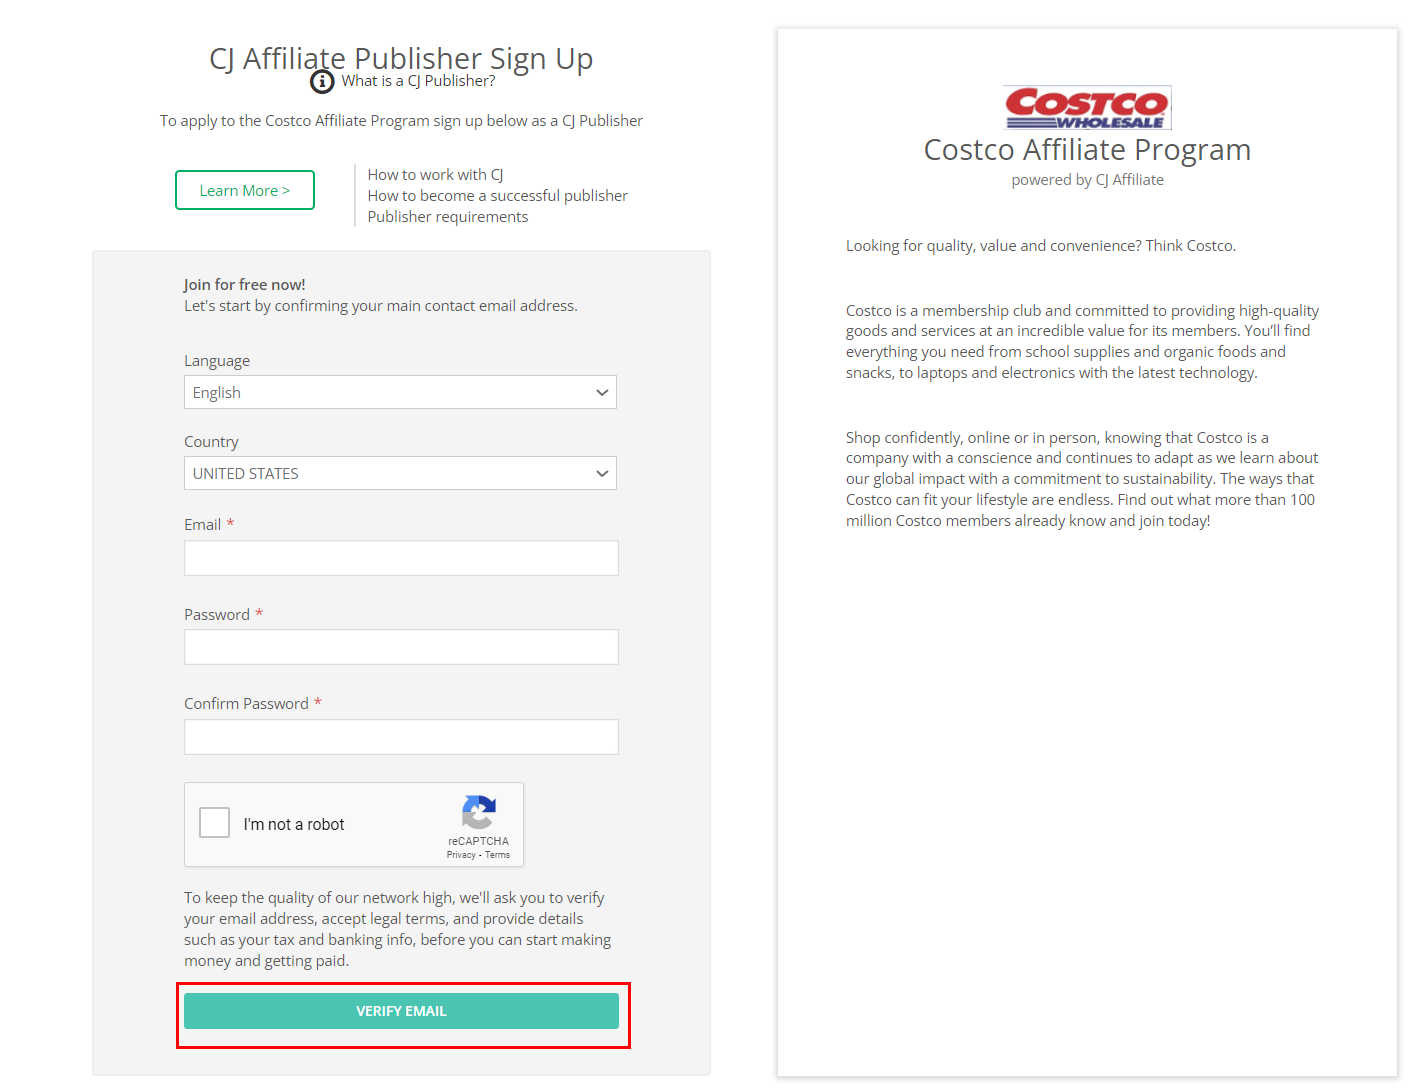 COSTCO affiliate program page on CJ